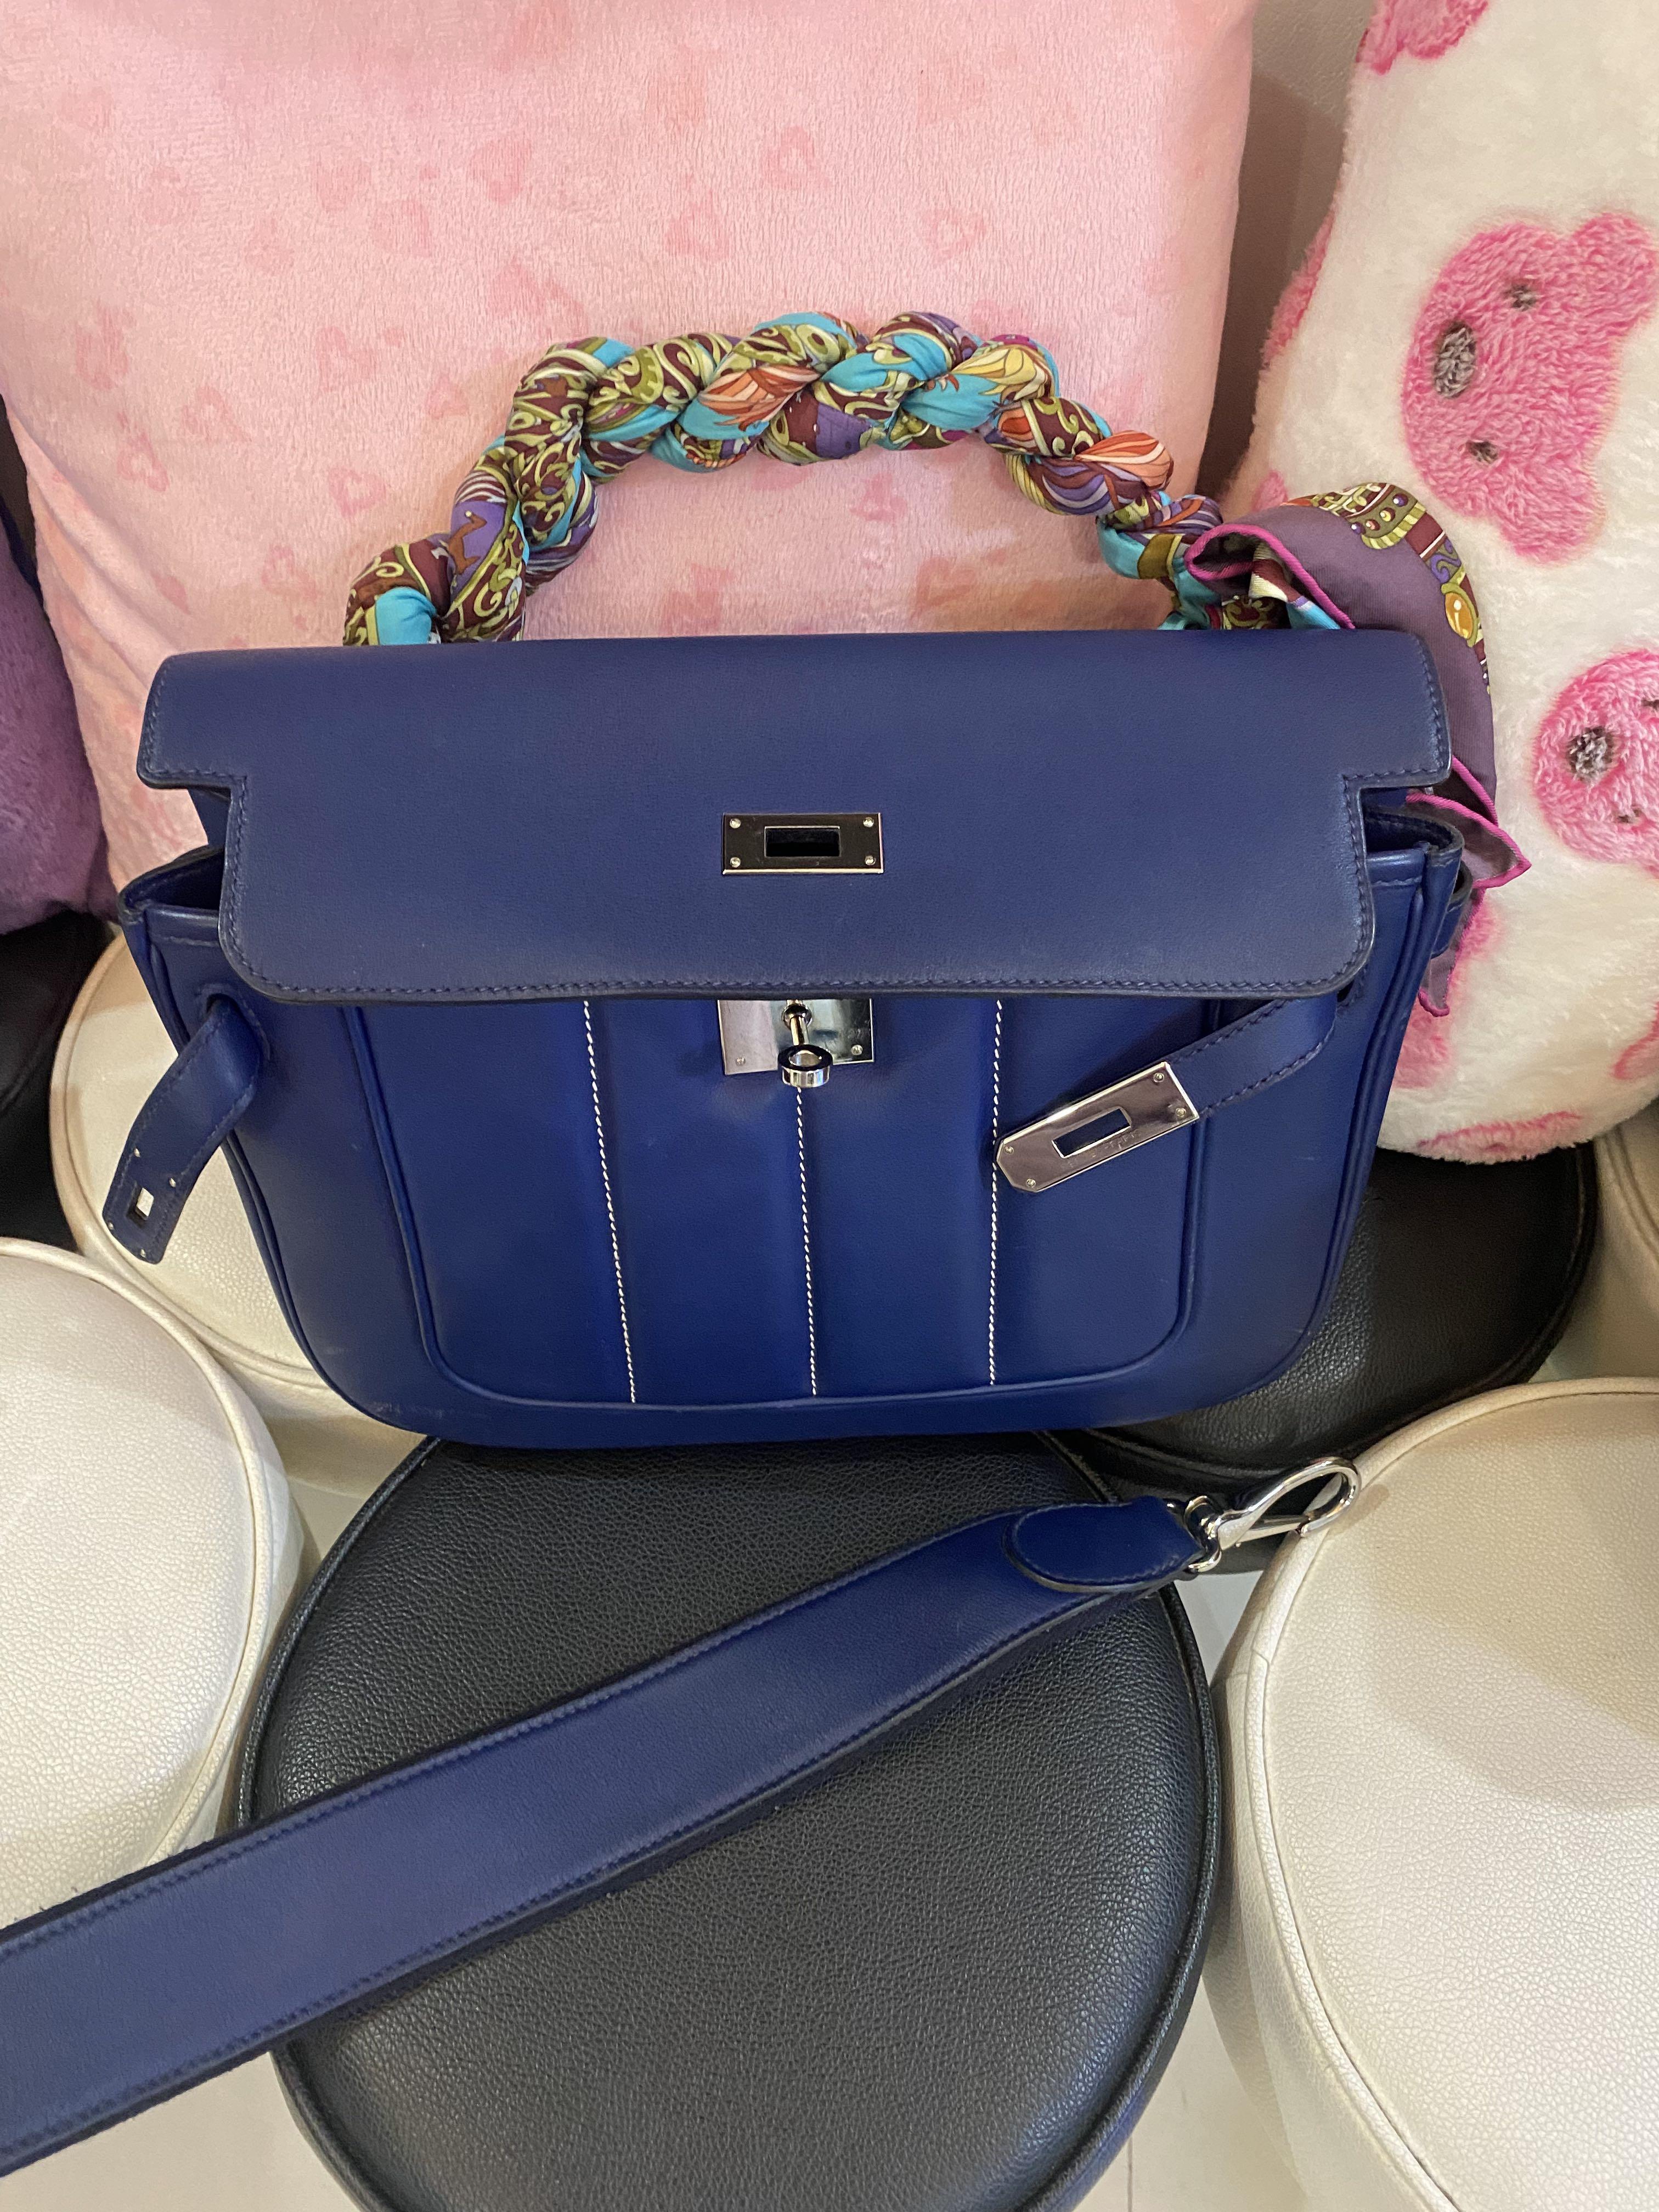 hermes mini berline bag in blue paradis, silver cdc, cartier bracelet  #fashion #style #clothes #ootd #fashionblogger…